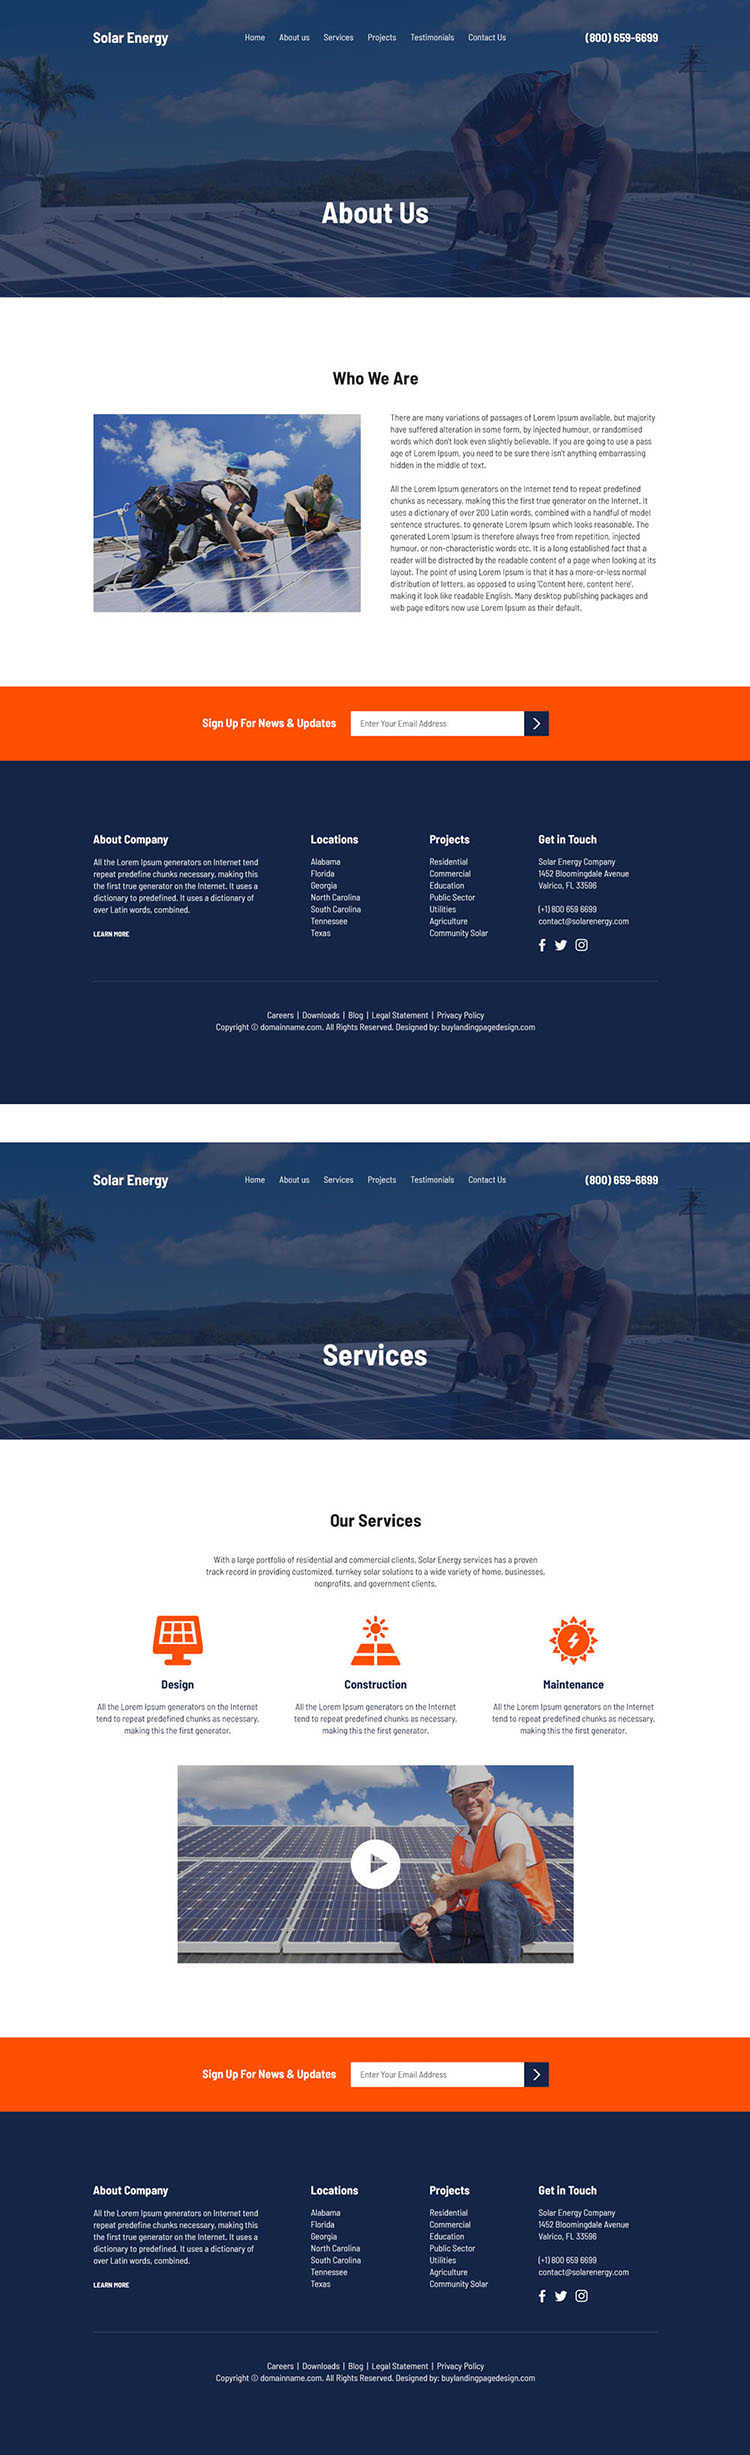 solar energy solutions free quote lead capturing website design